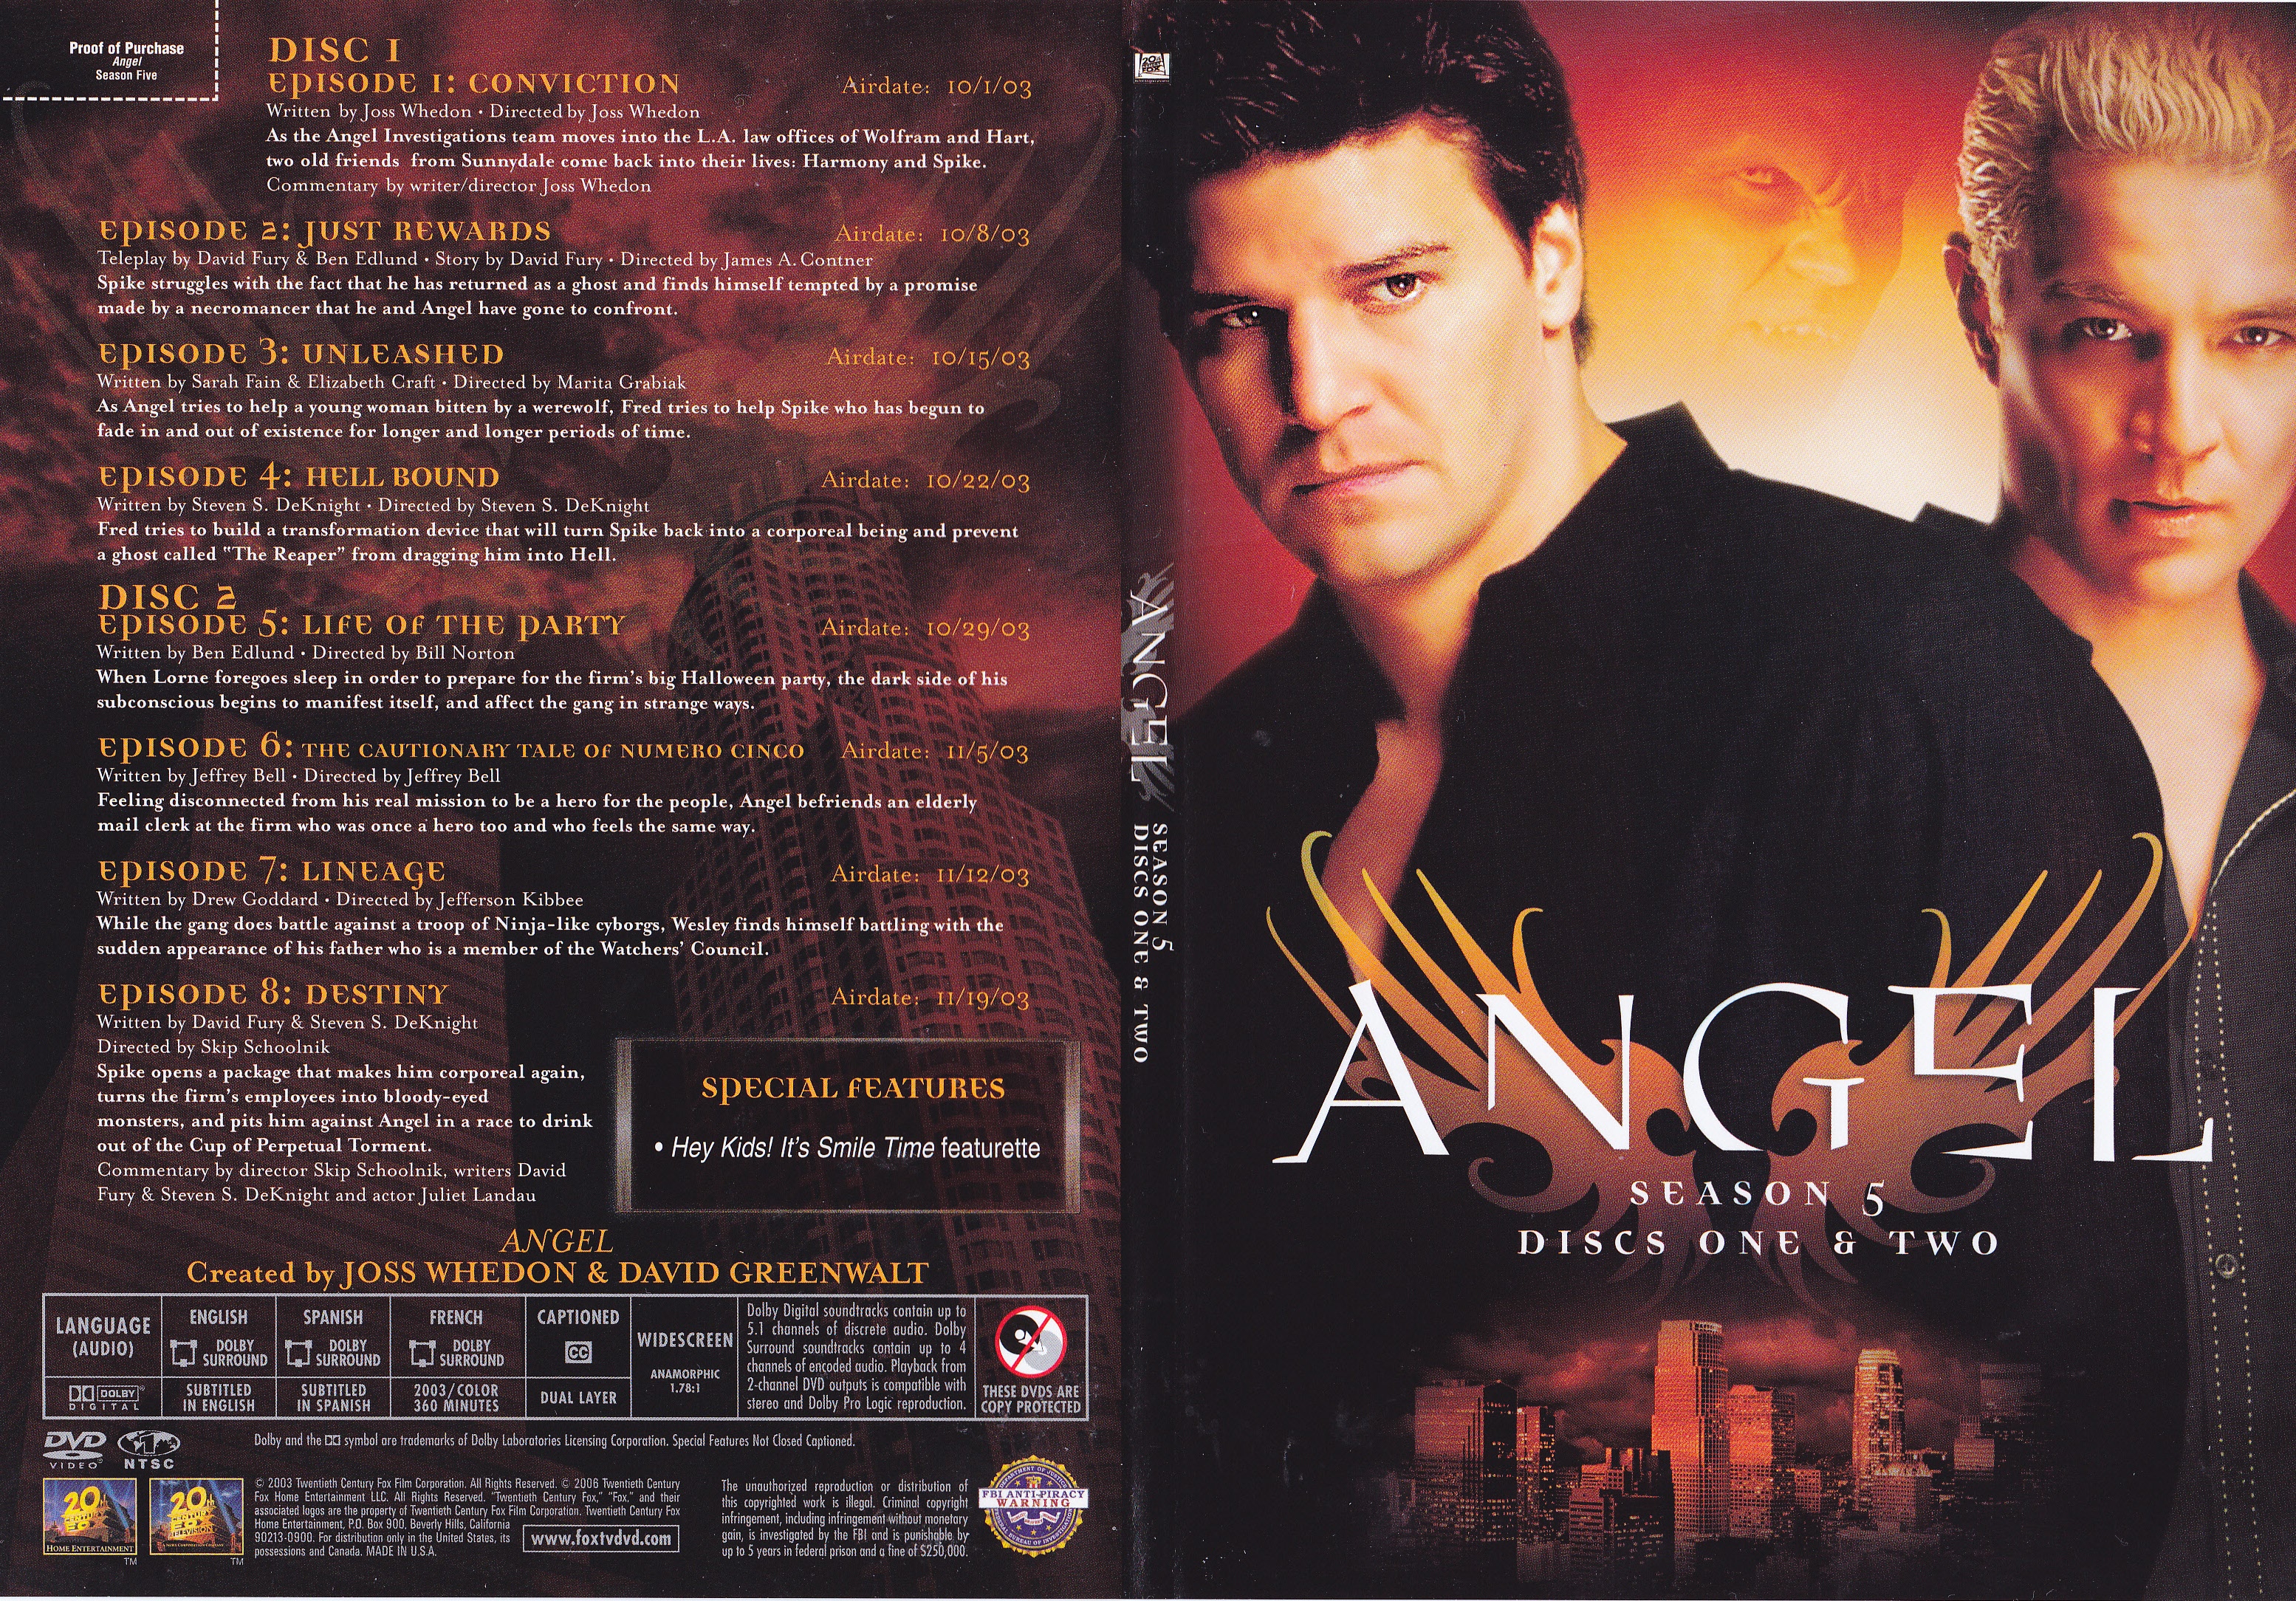 Jaquette DVD Angel Saison 5 DVD 1 (Canadienne)